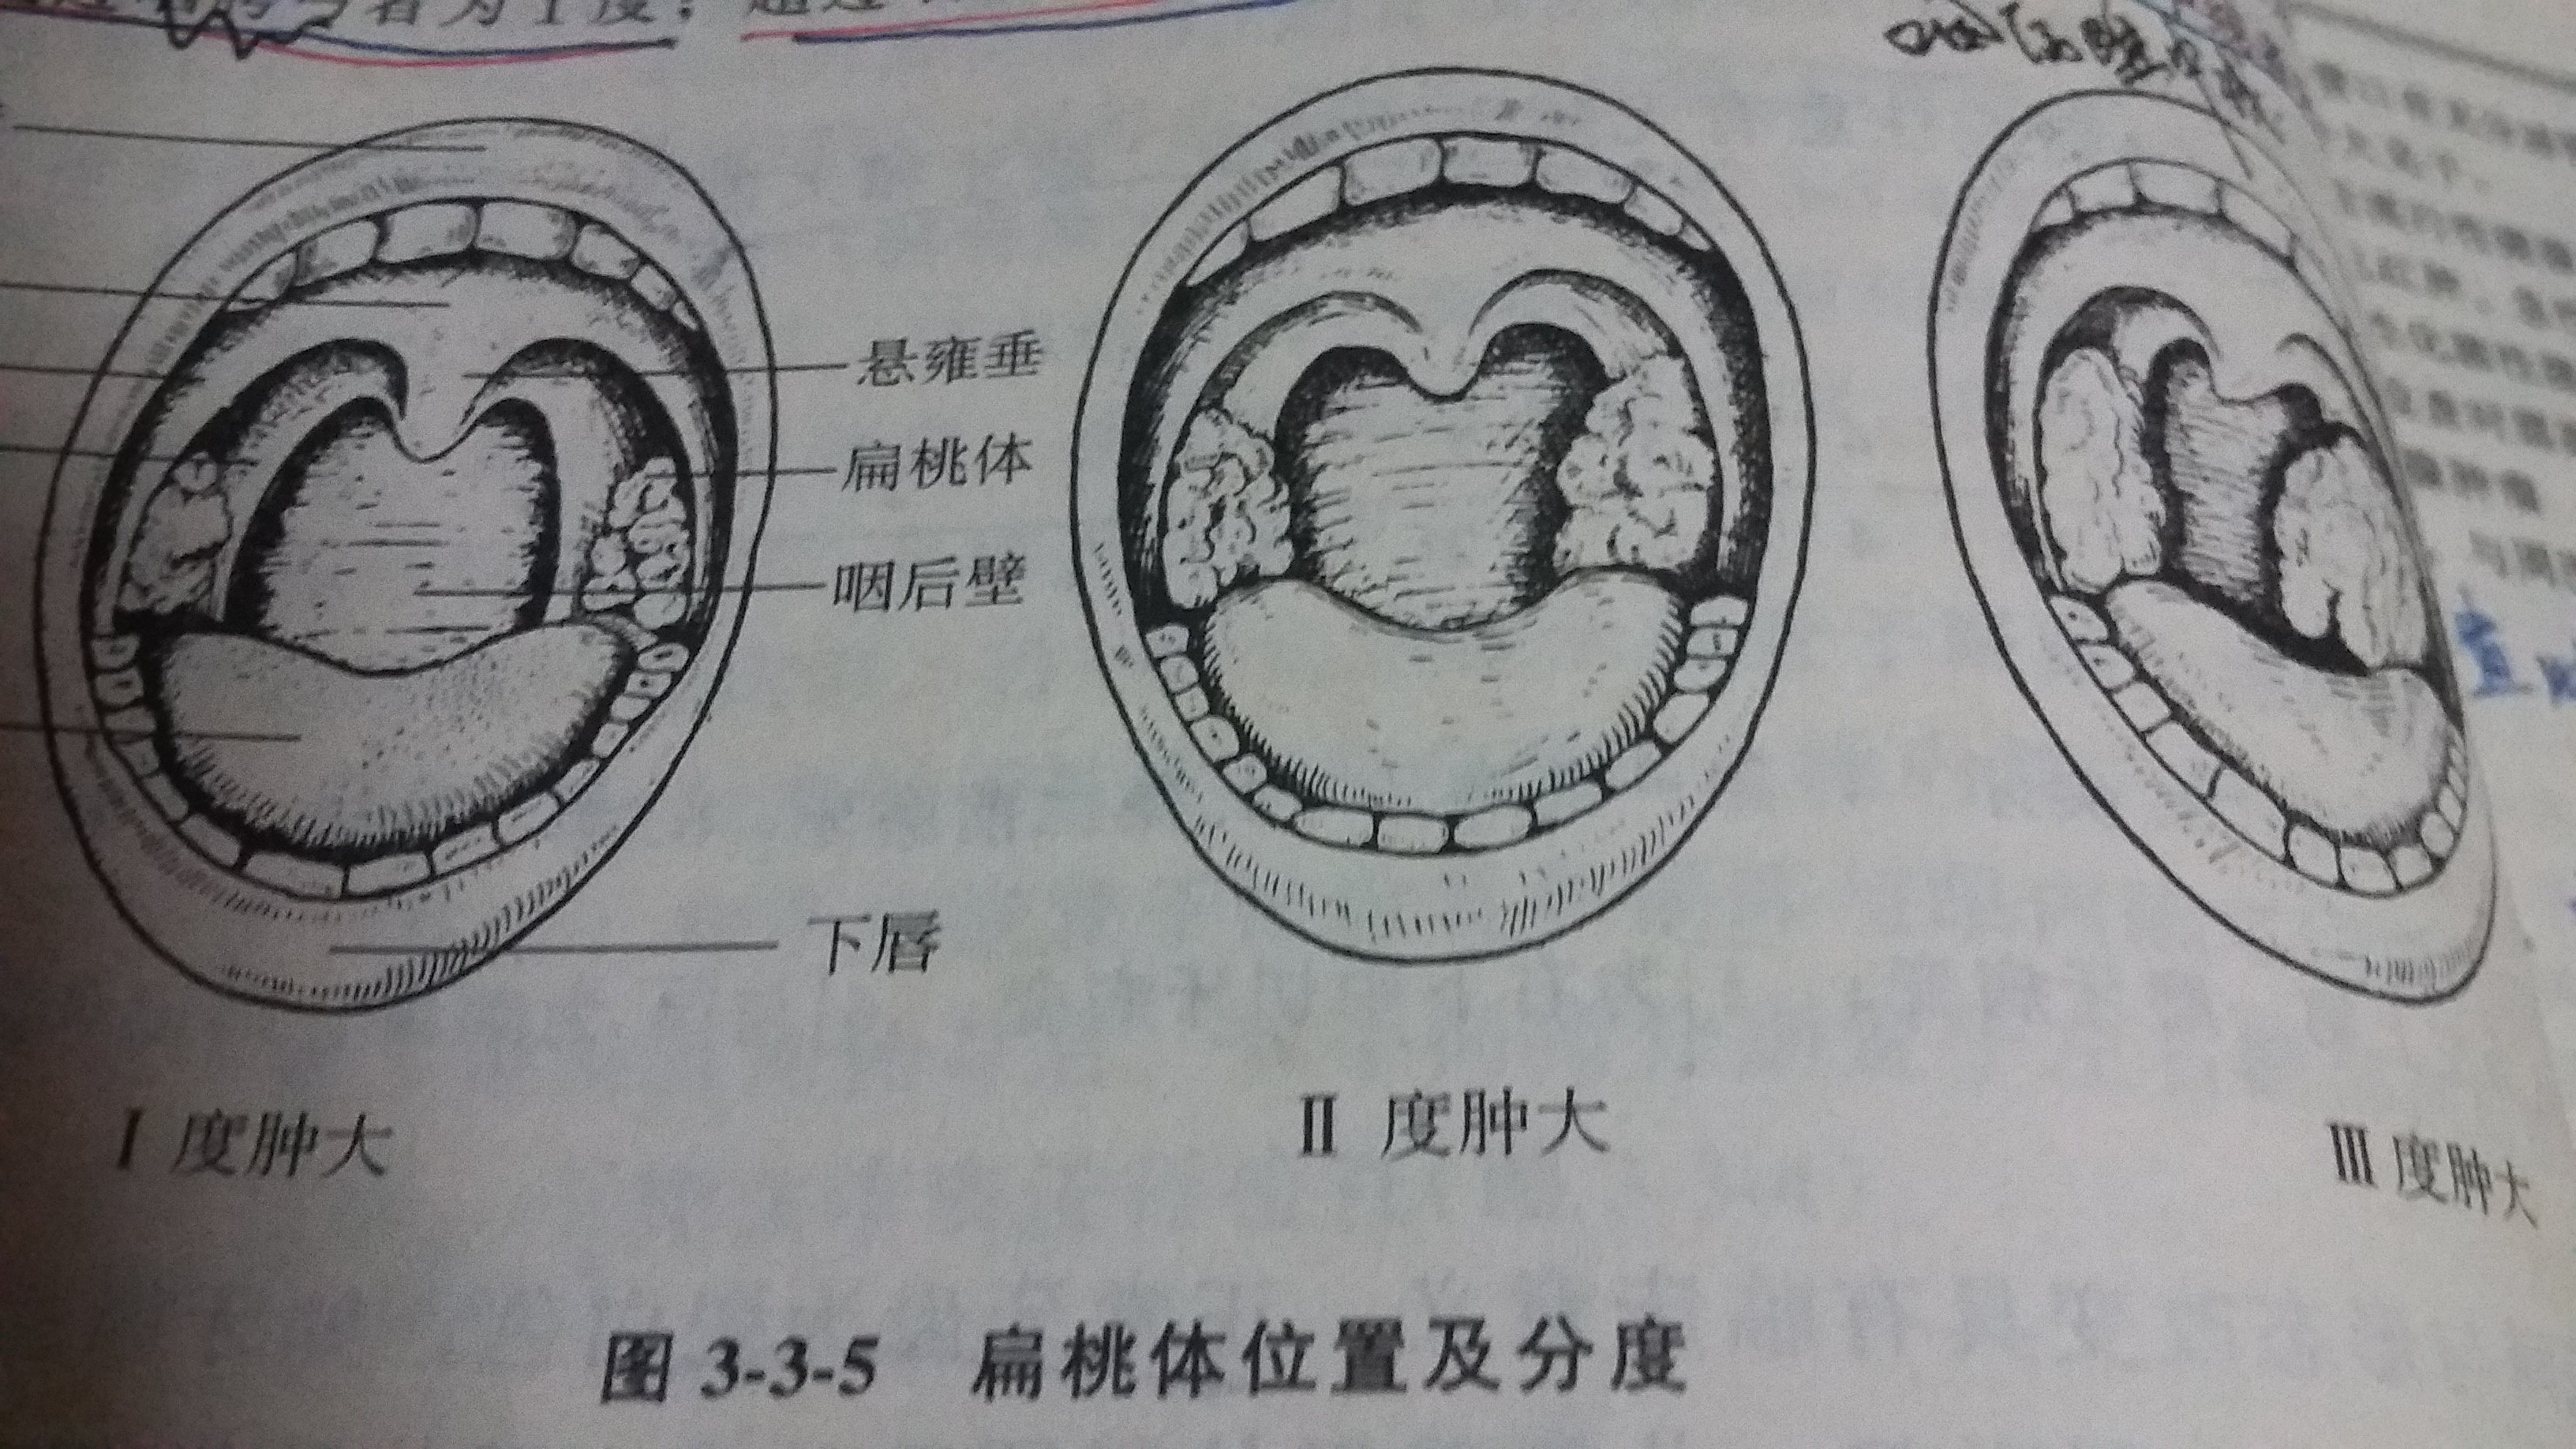 咽腭弓和舌腭弓图片